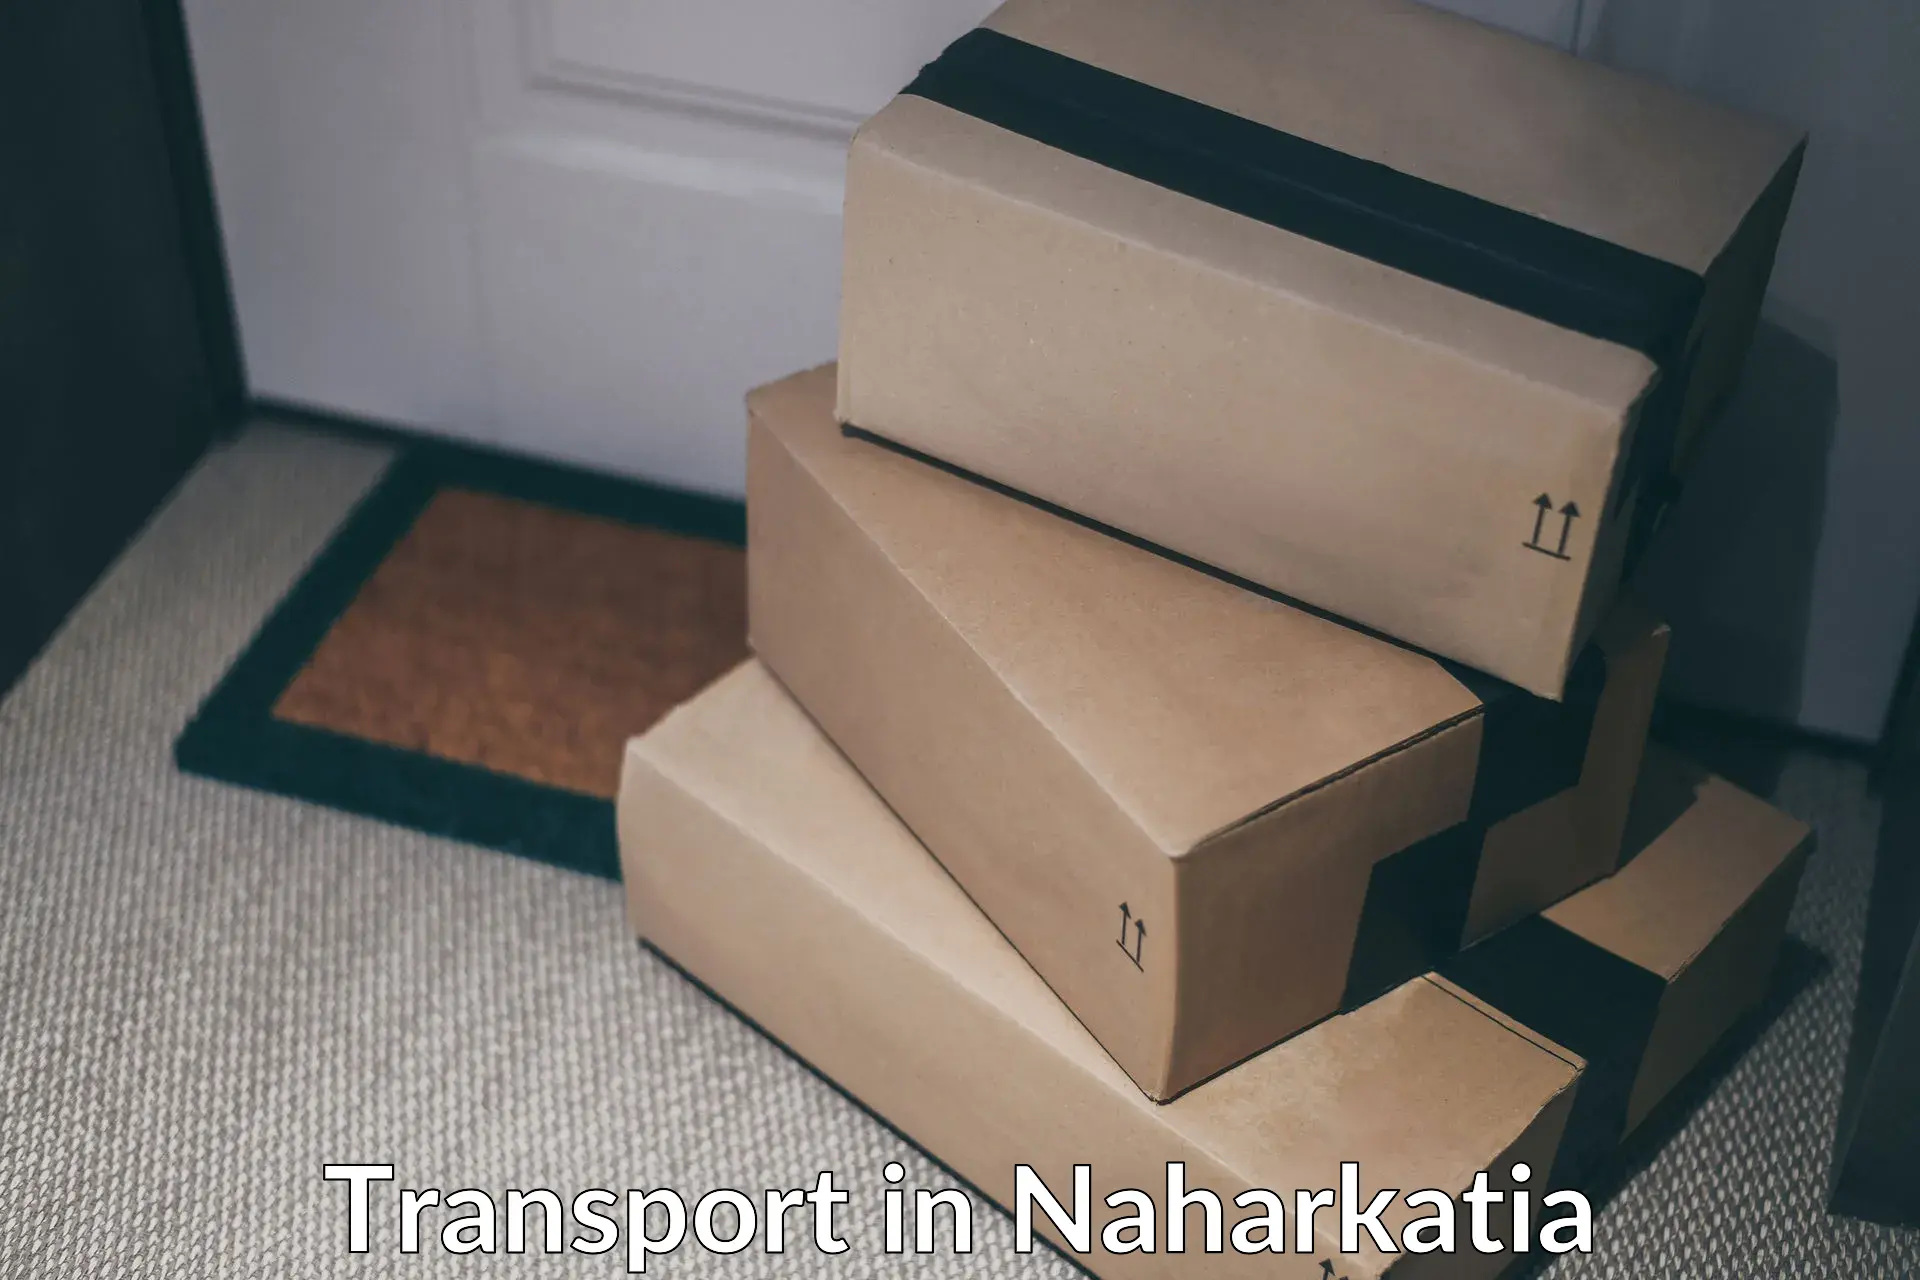 Sending bike to another city in Naharkatia